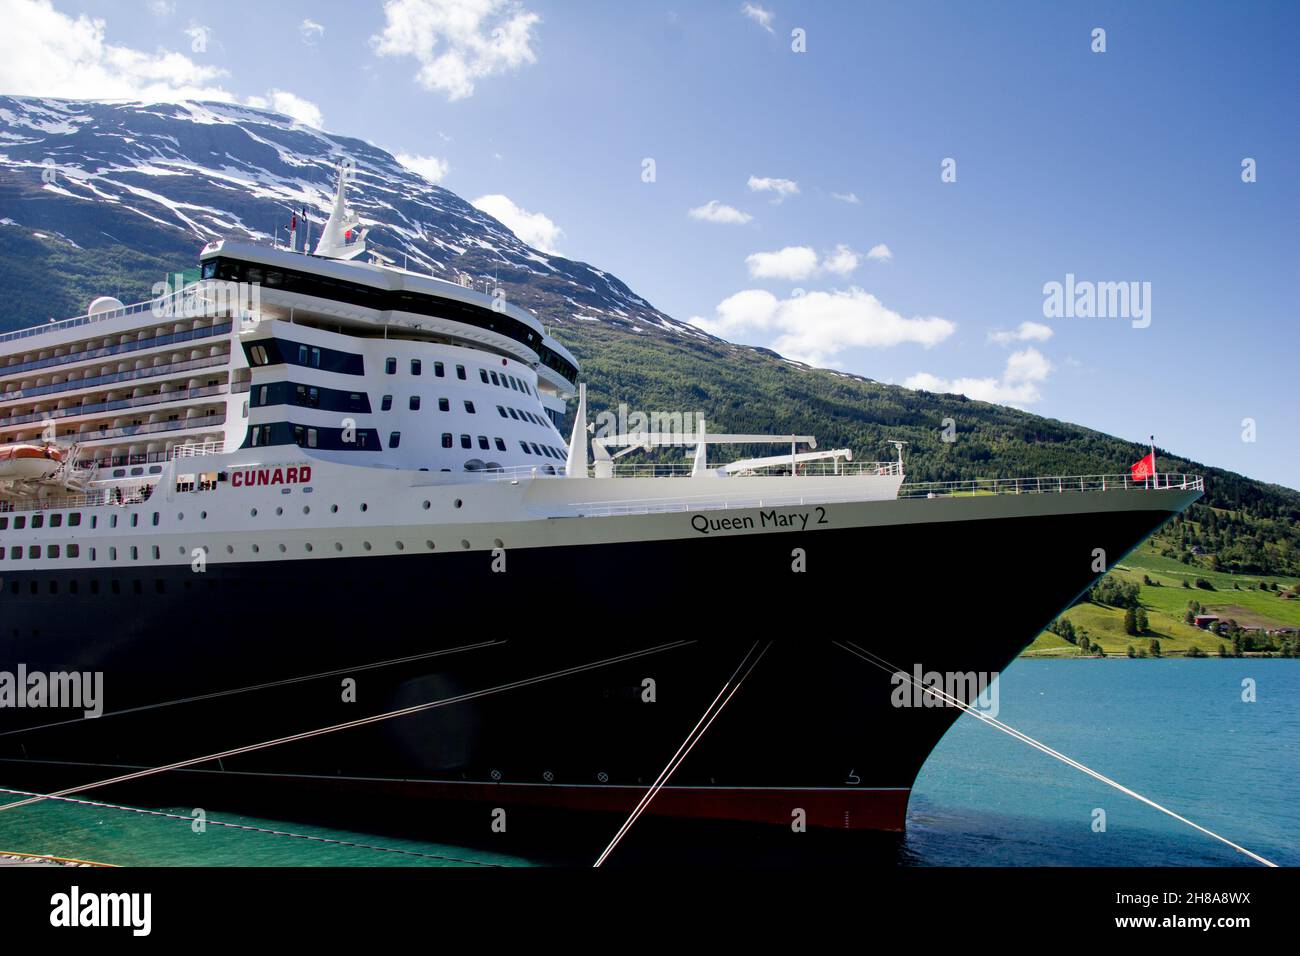 La linea Cunard Regina Maria 2 ormeggiata a Olden nel Nordfjorden, in Norvegia. Contea di Sogn og Fjordane. Foto Stock